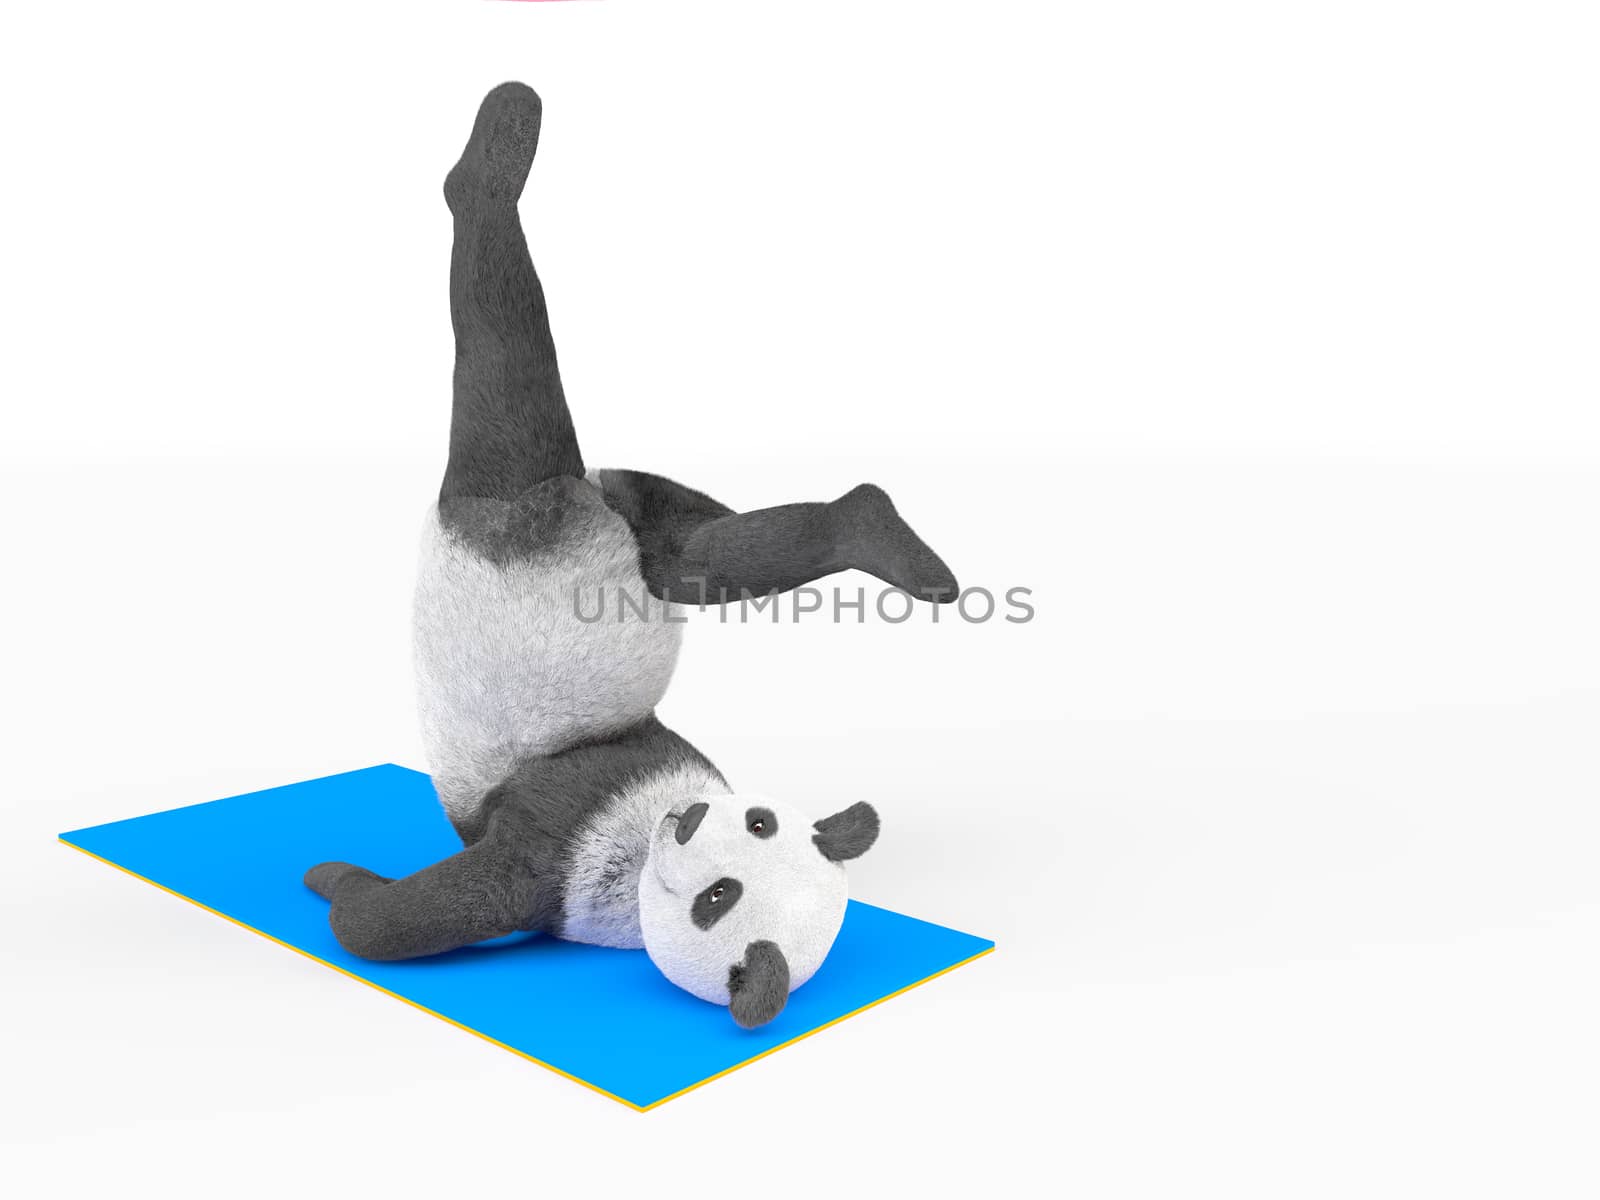 animal character personage panda doing yoga by xtate